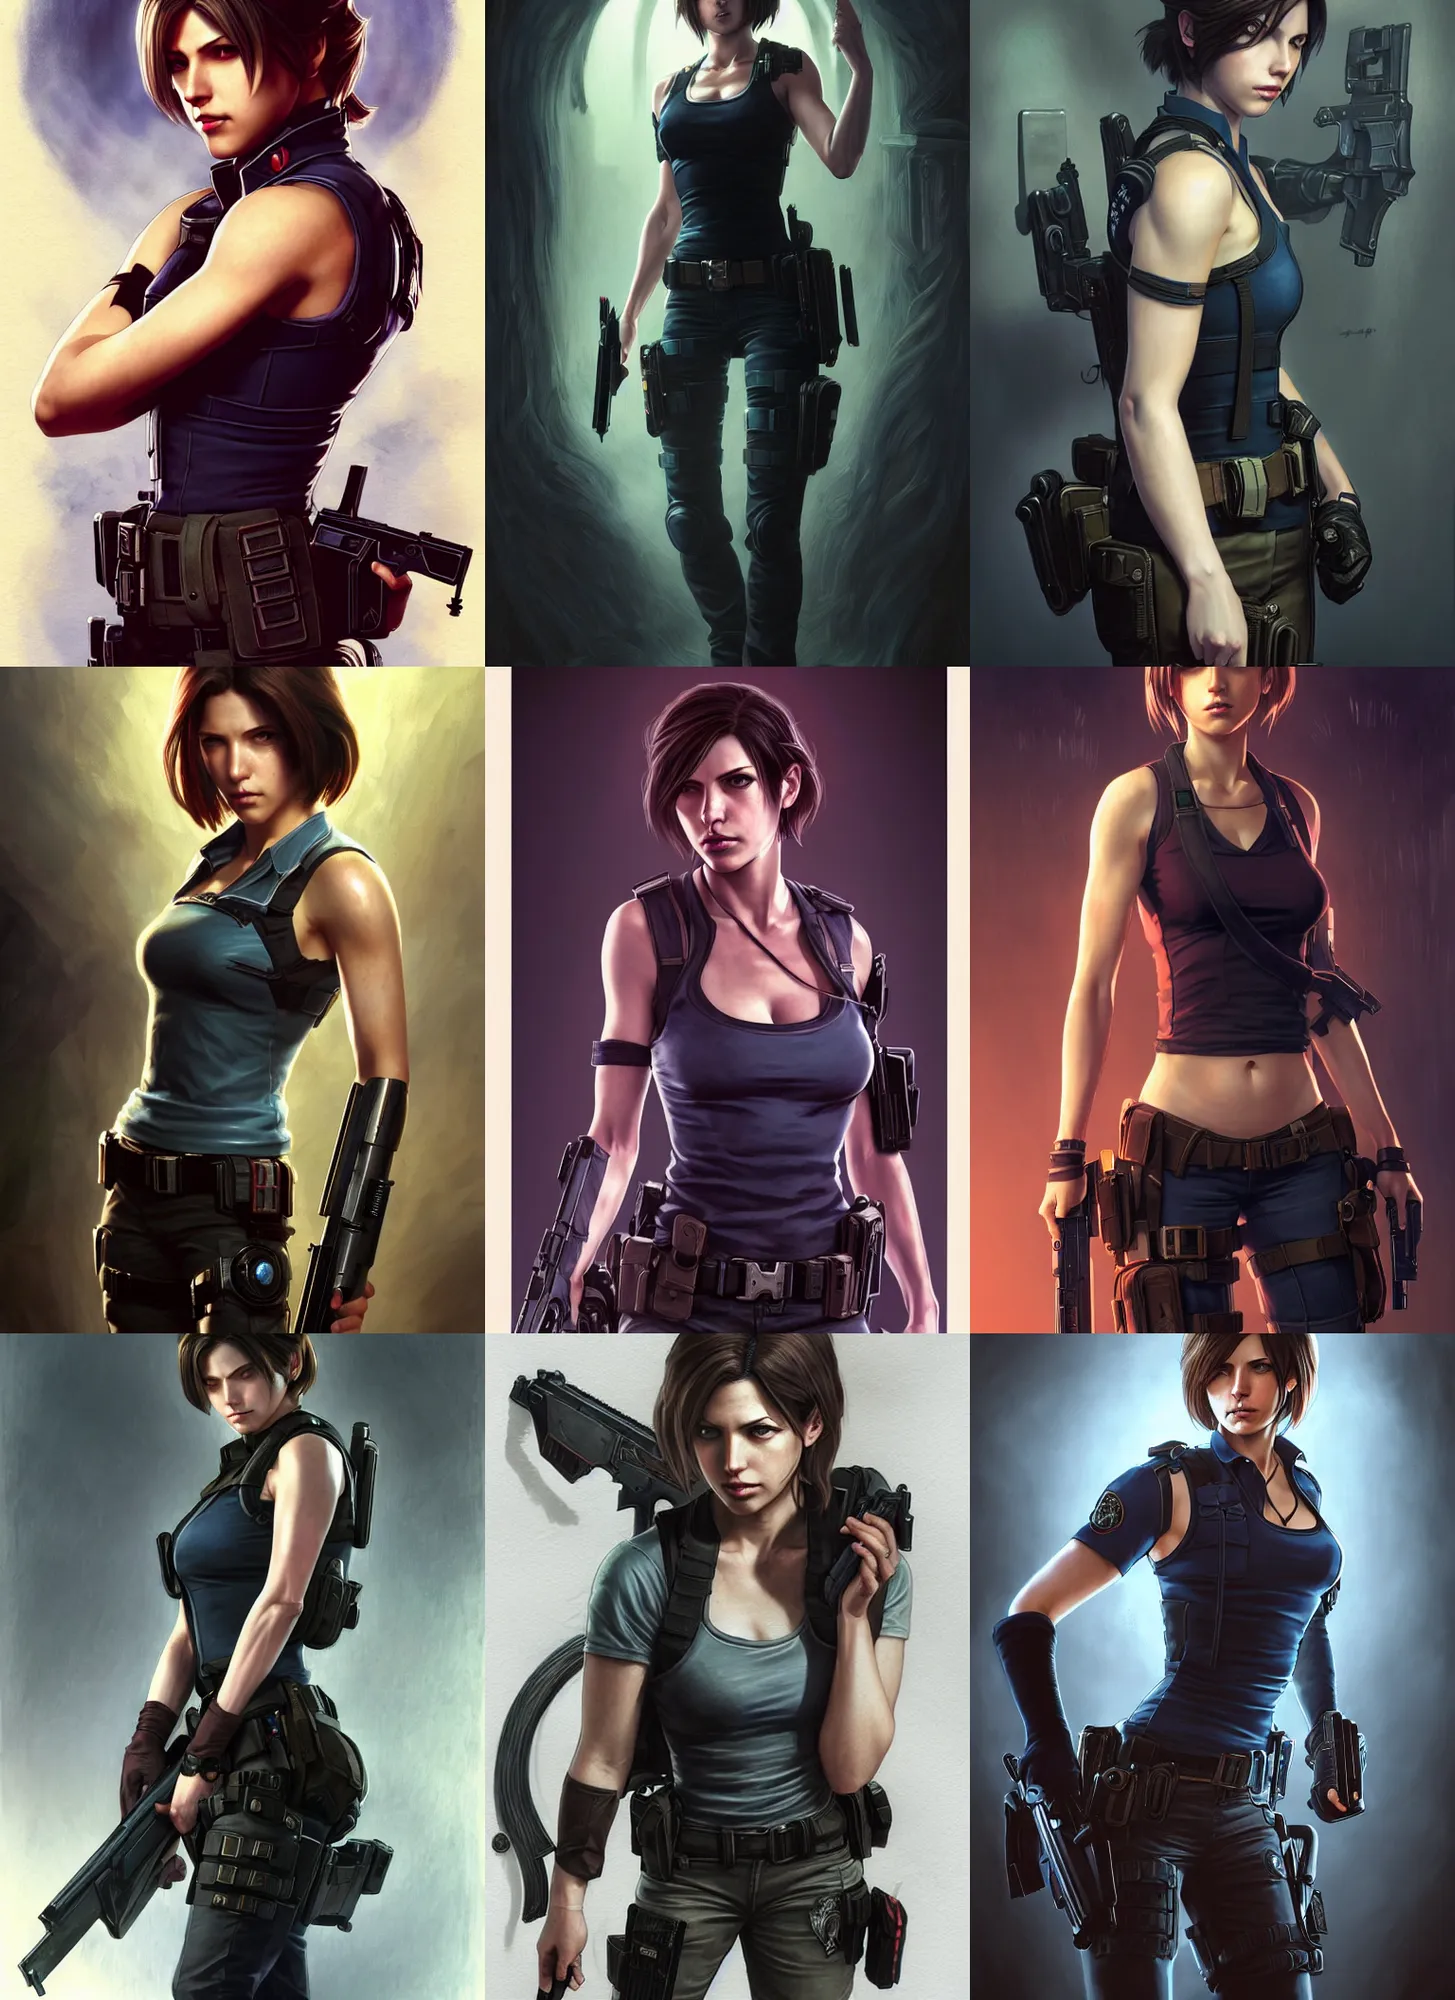 ArtStation - Resident Evil 5 Jill Valentine